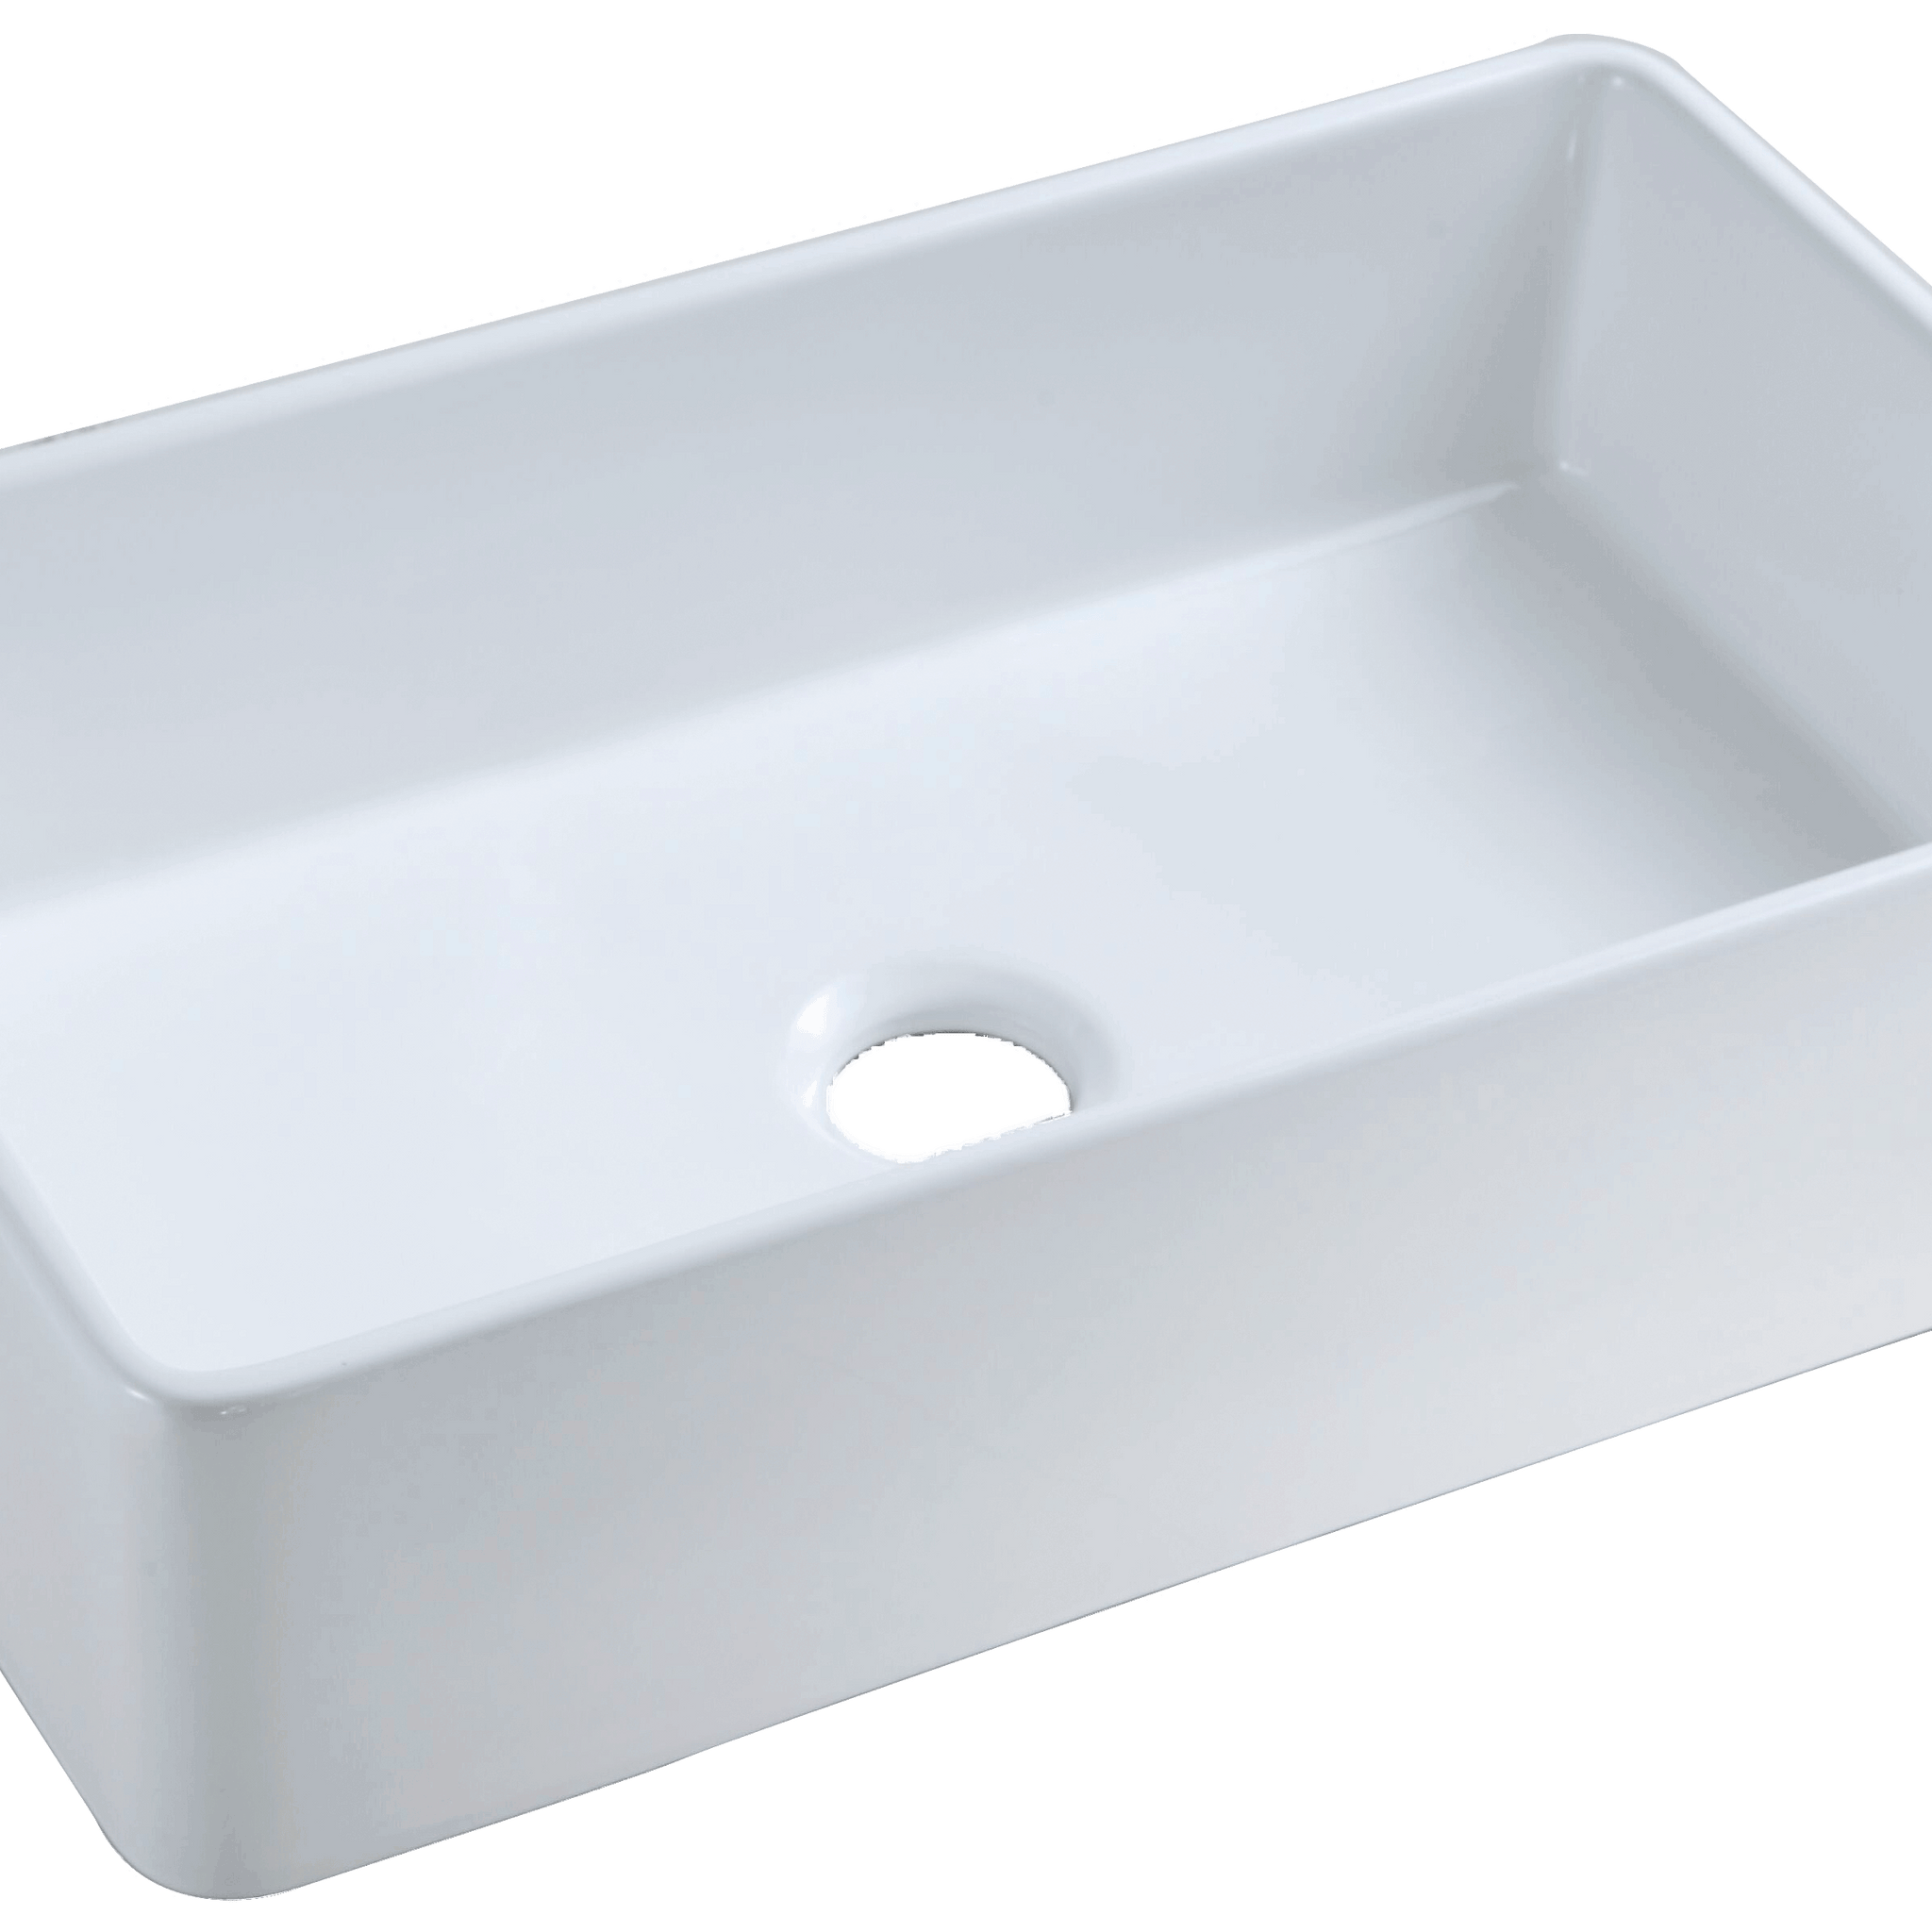 23 Inch White Single Bowl Porcelain Apron Front Kitchen Sink